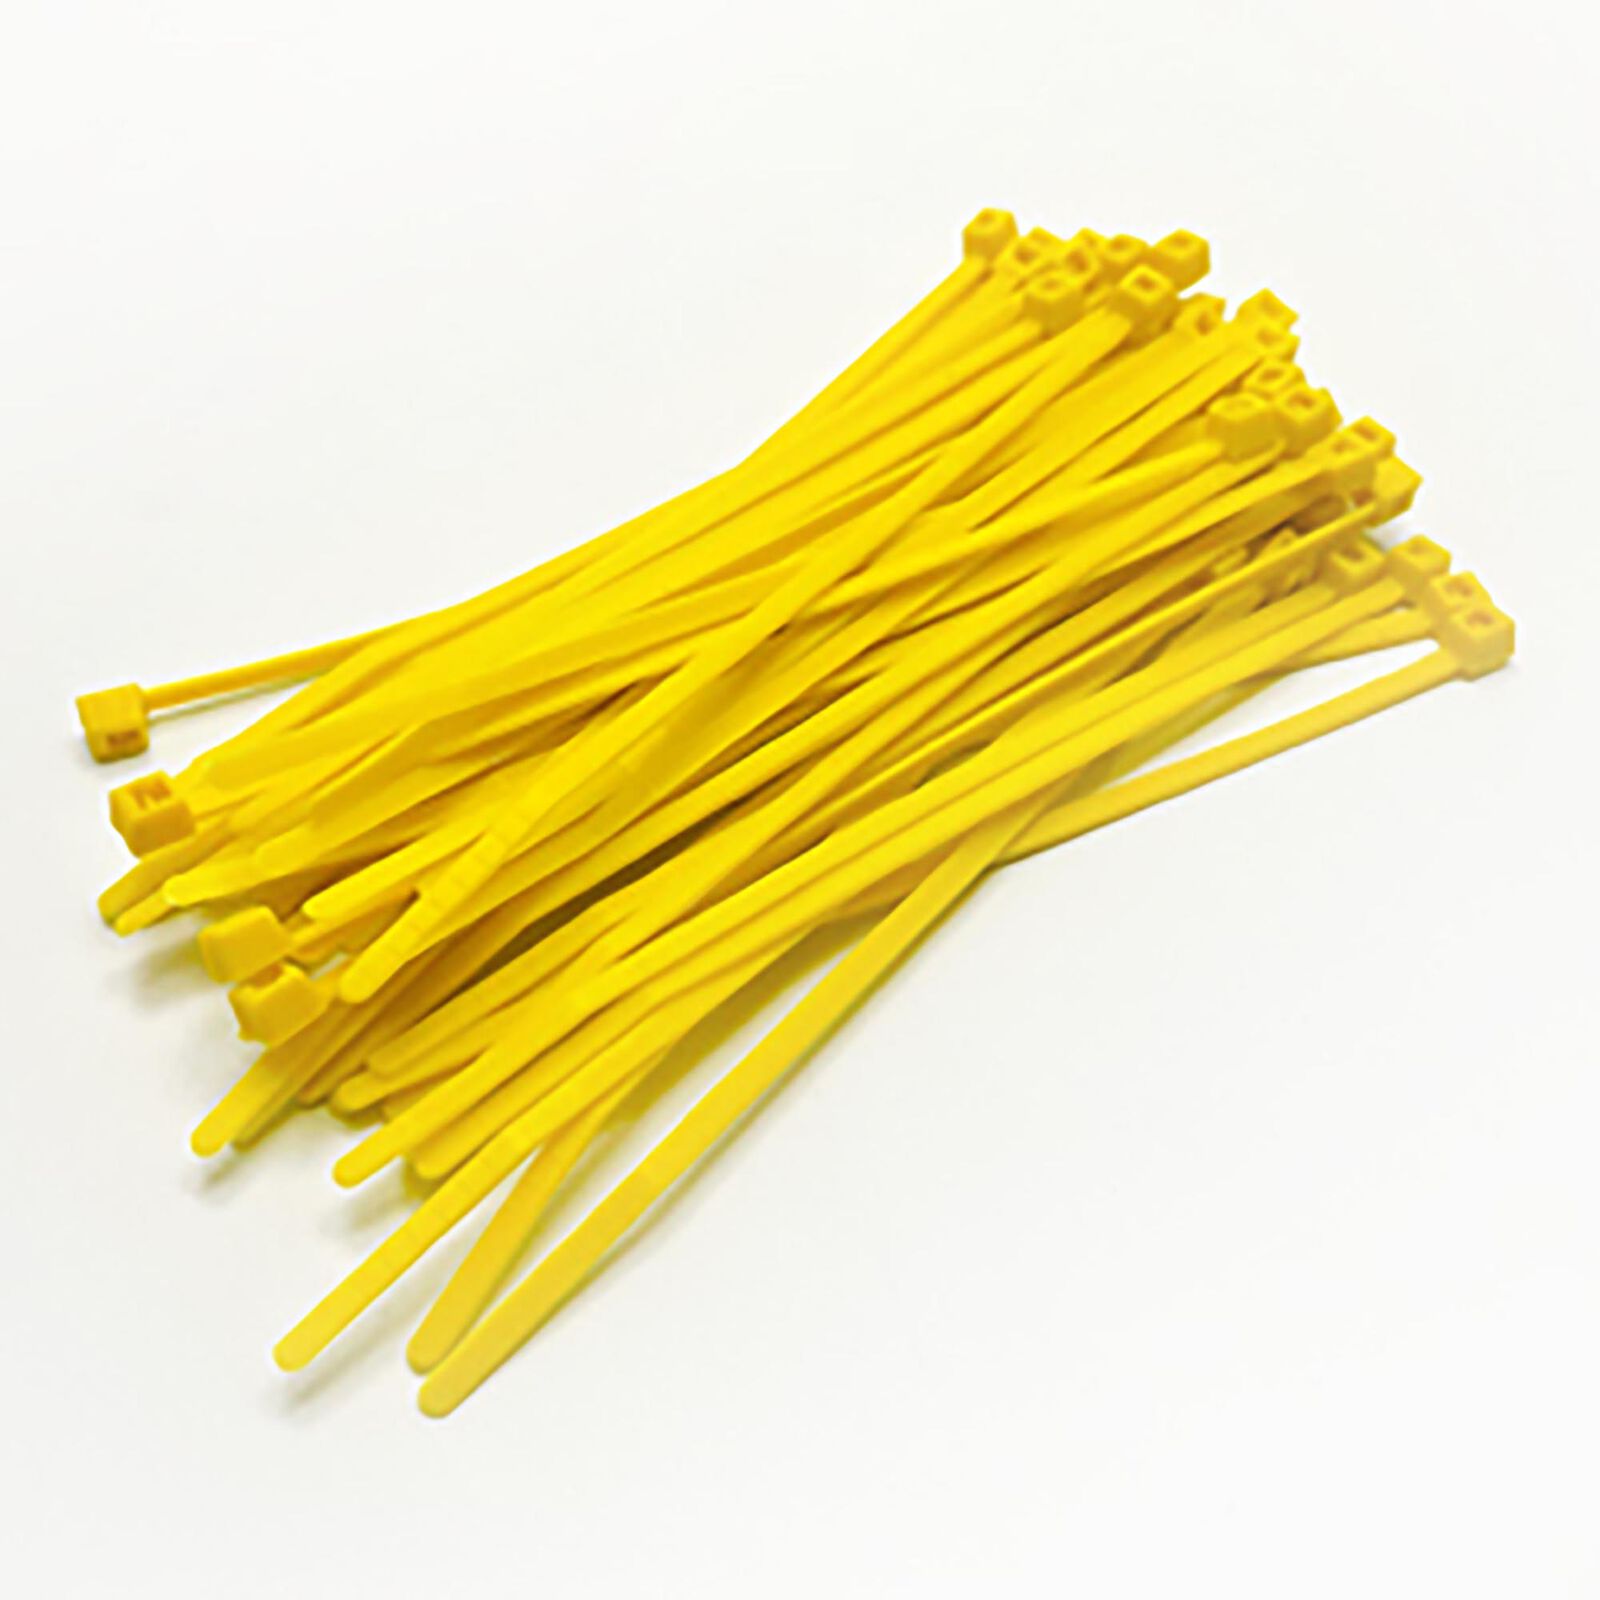 8" Tie Wraps, Yellow (50)